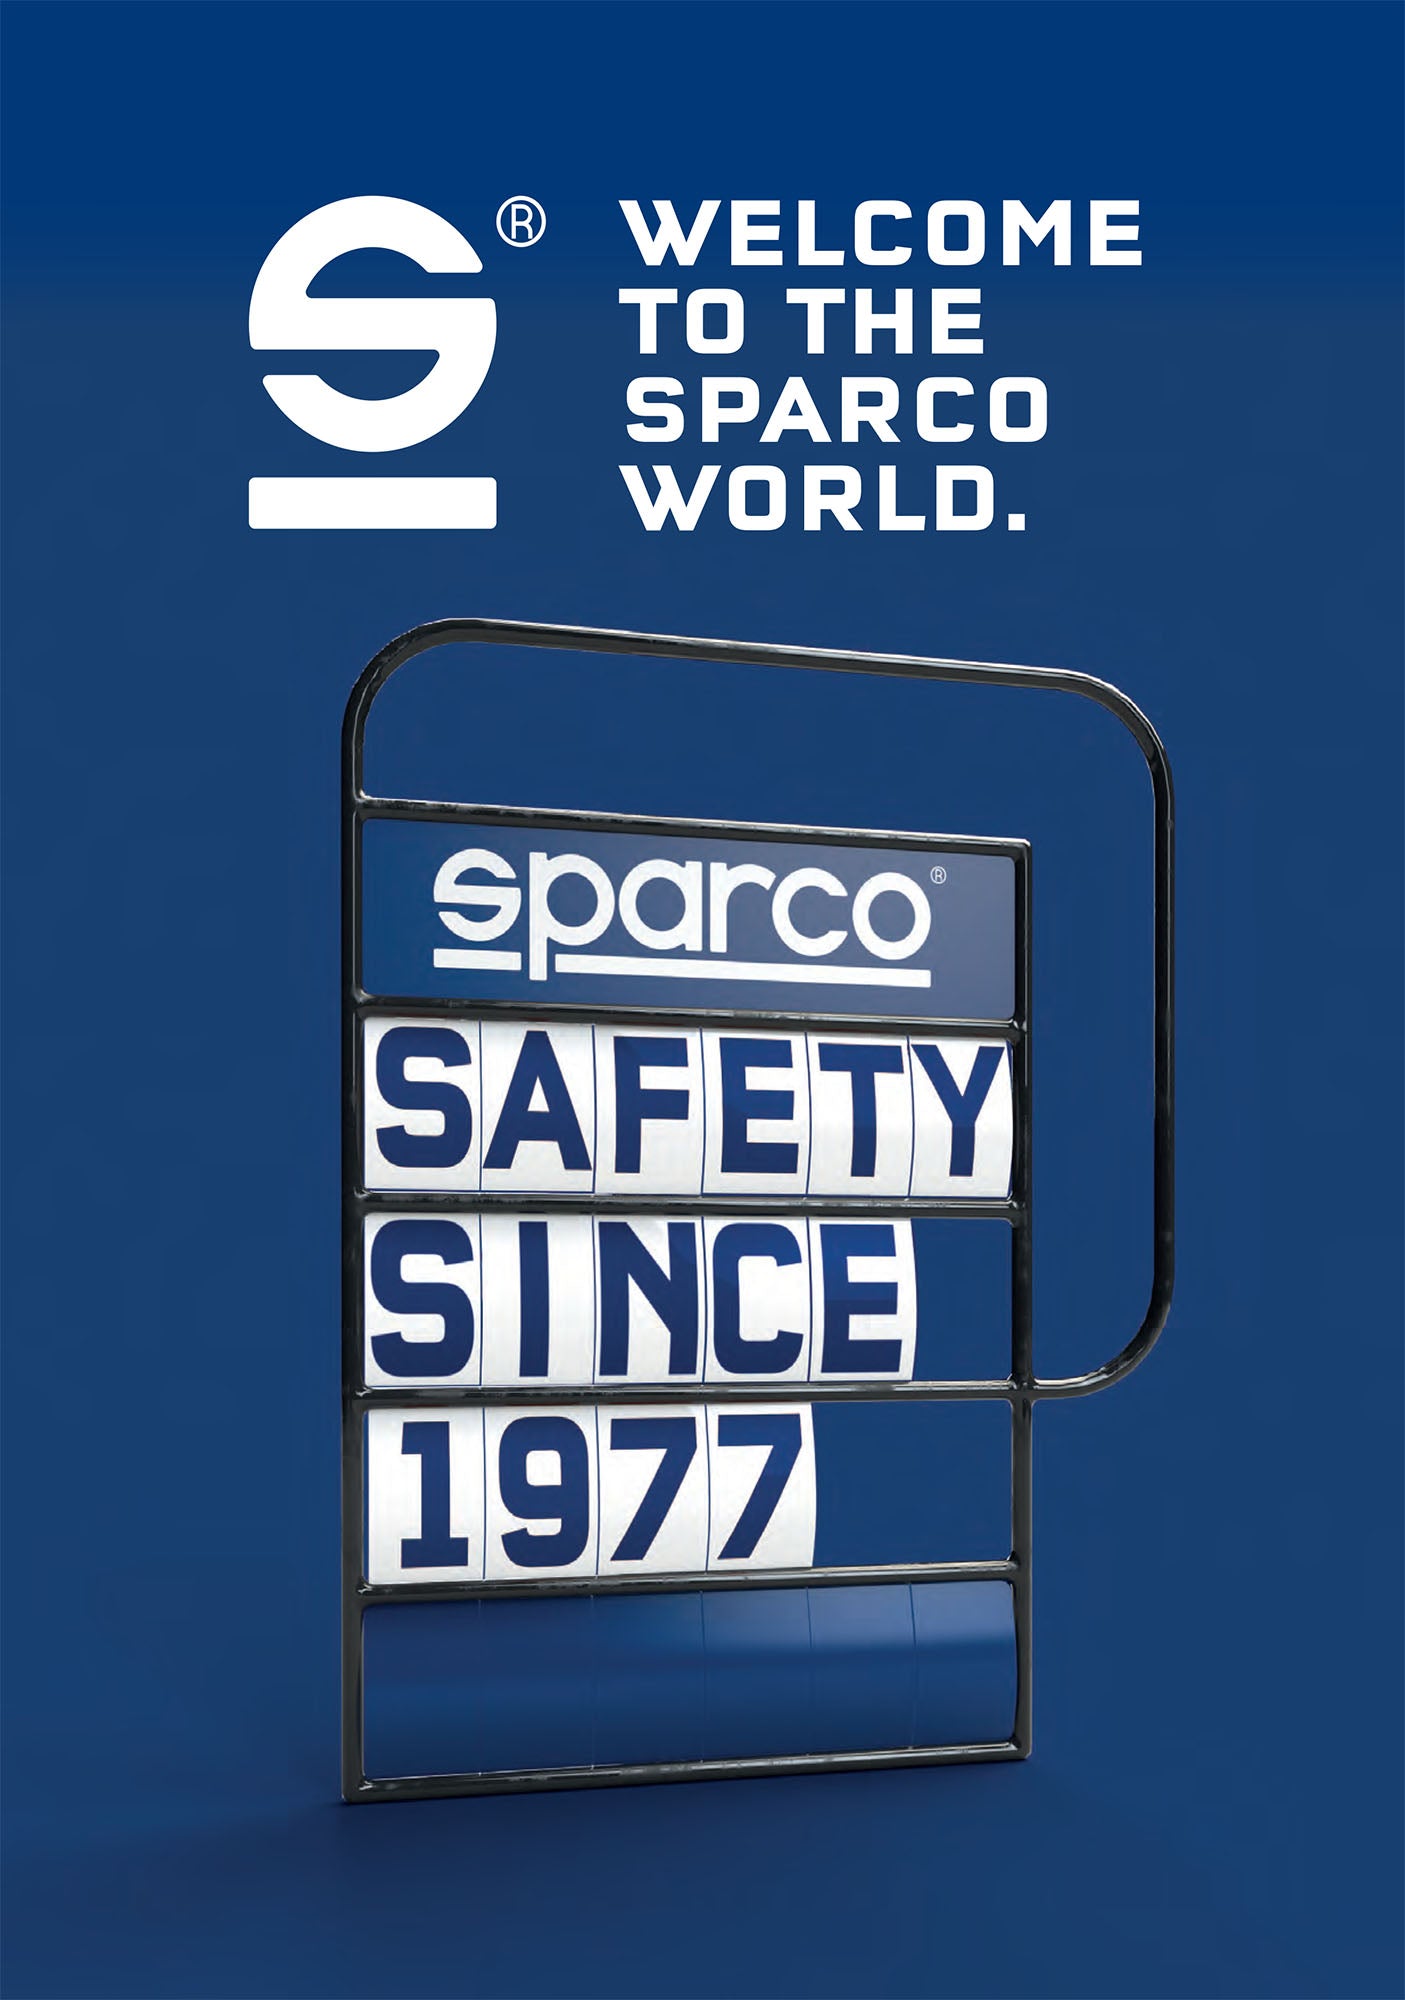 02410 Sparco Cargo Shorts Cotton Race Mechanic Workwear Pitcrew Teamwear Leisure